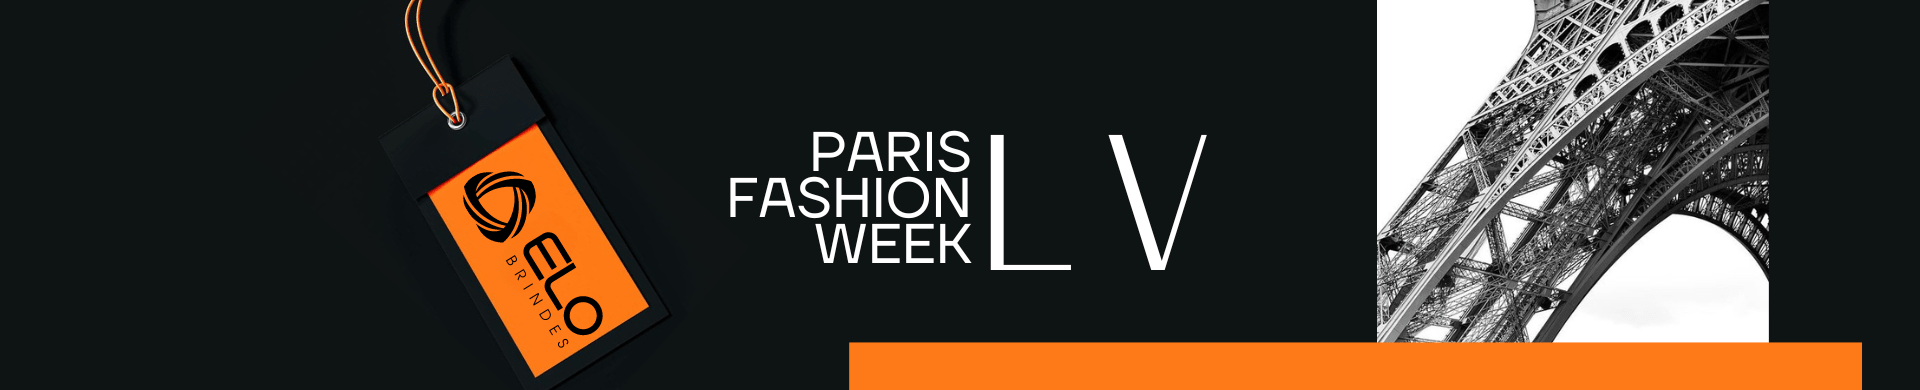 Paris Fashion Week LV